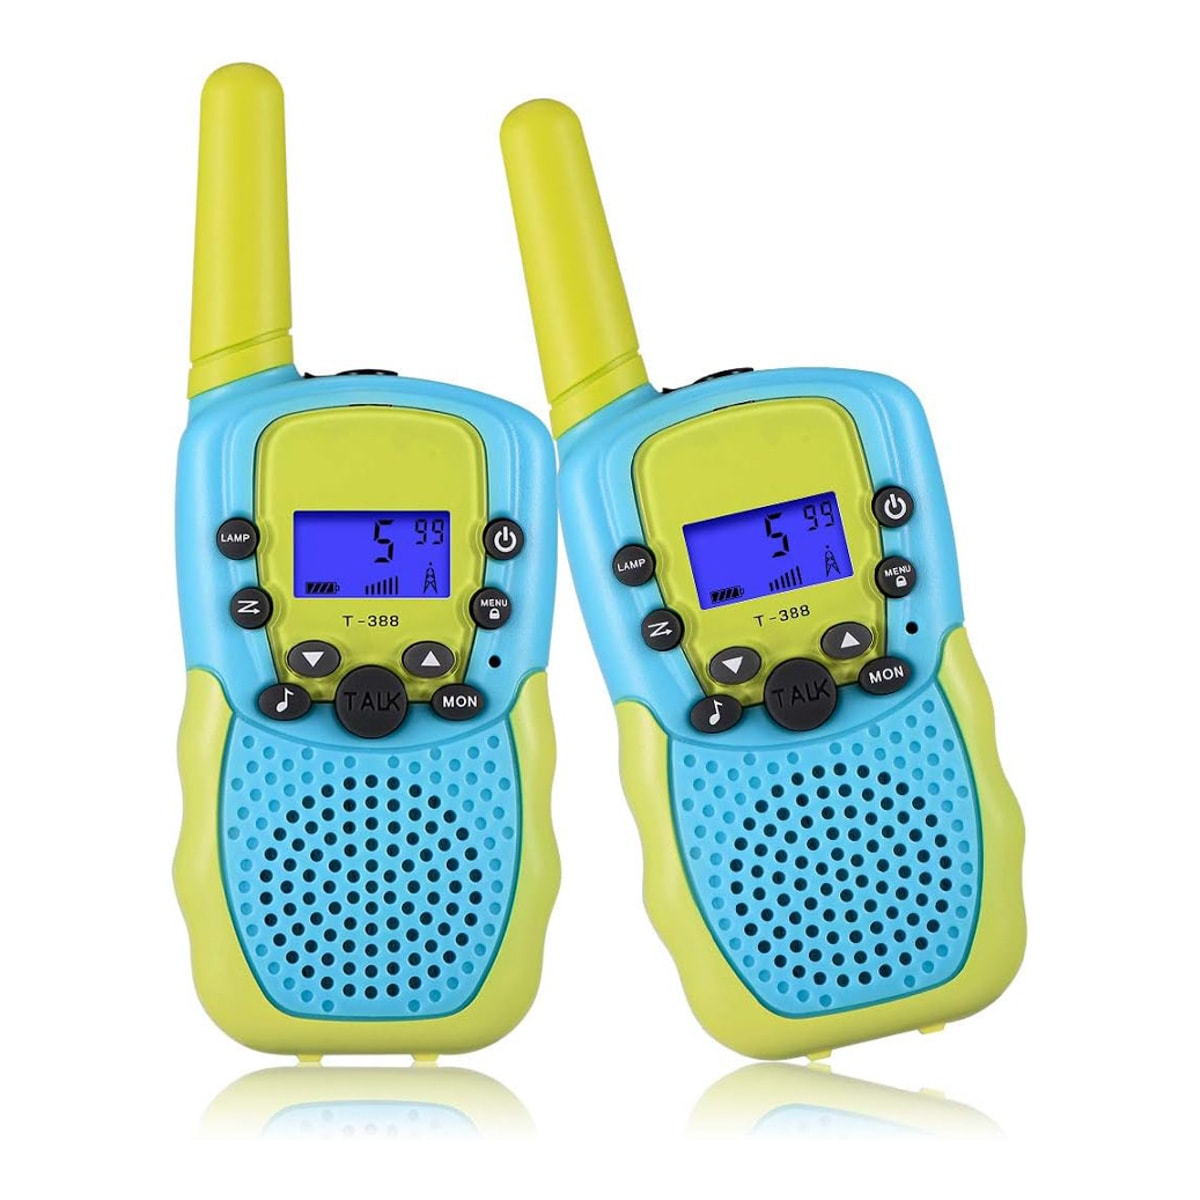 Two kids walkie talkies.